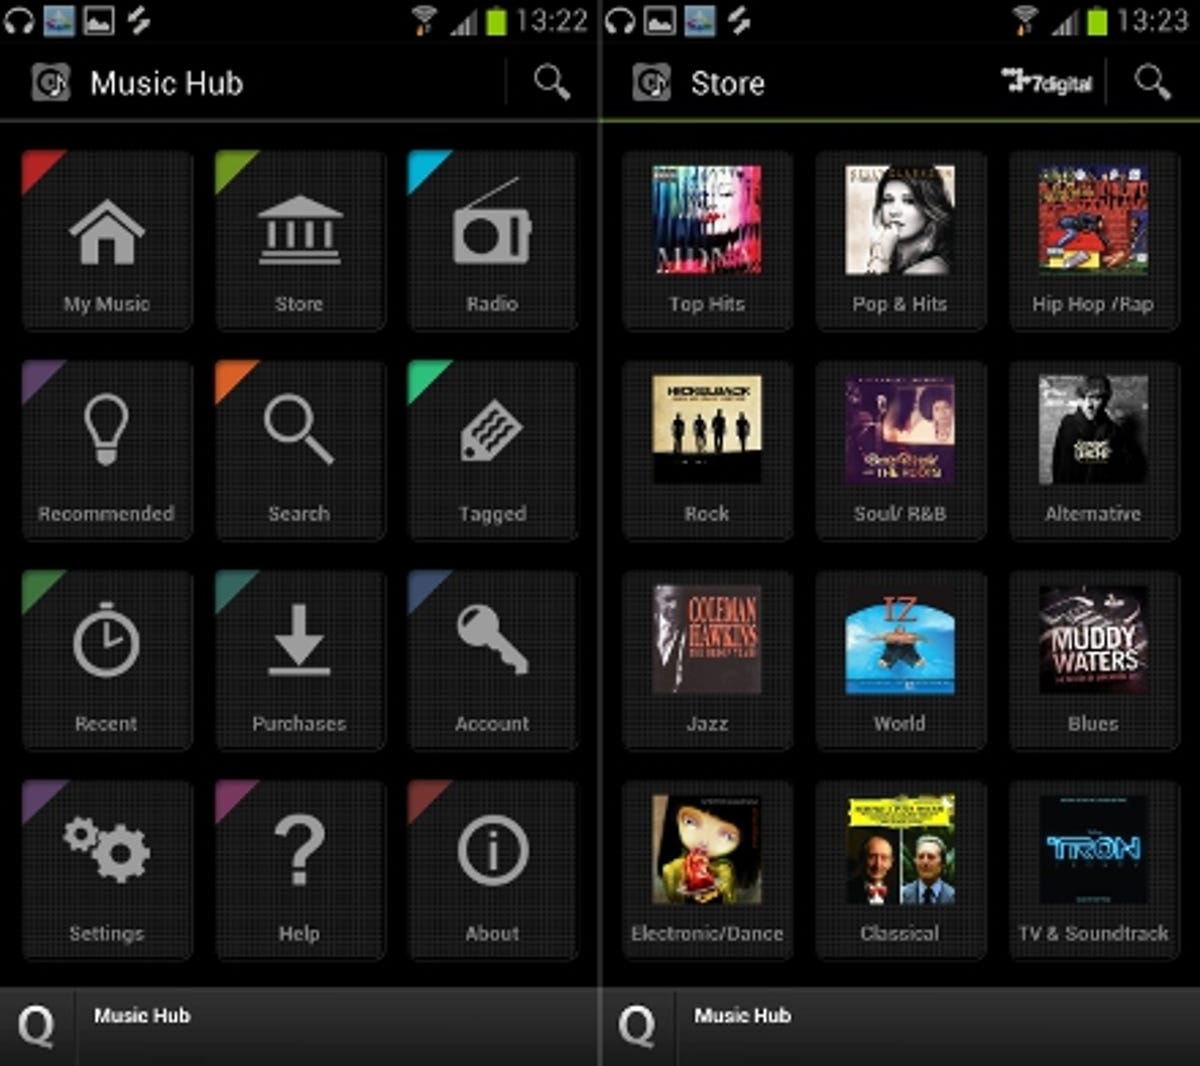 Samsung Galaxy S3 music store